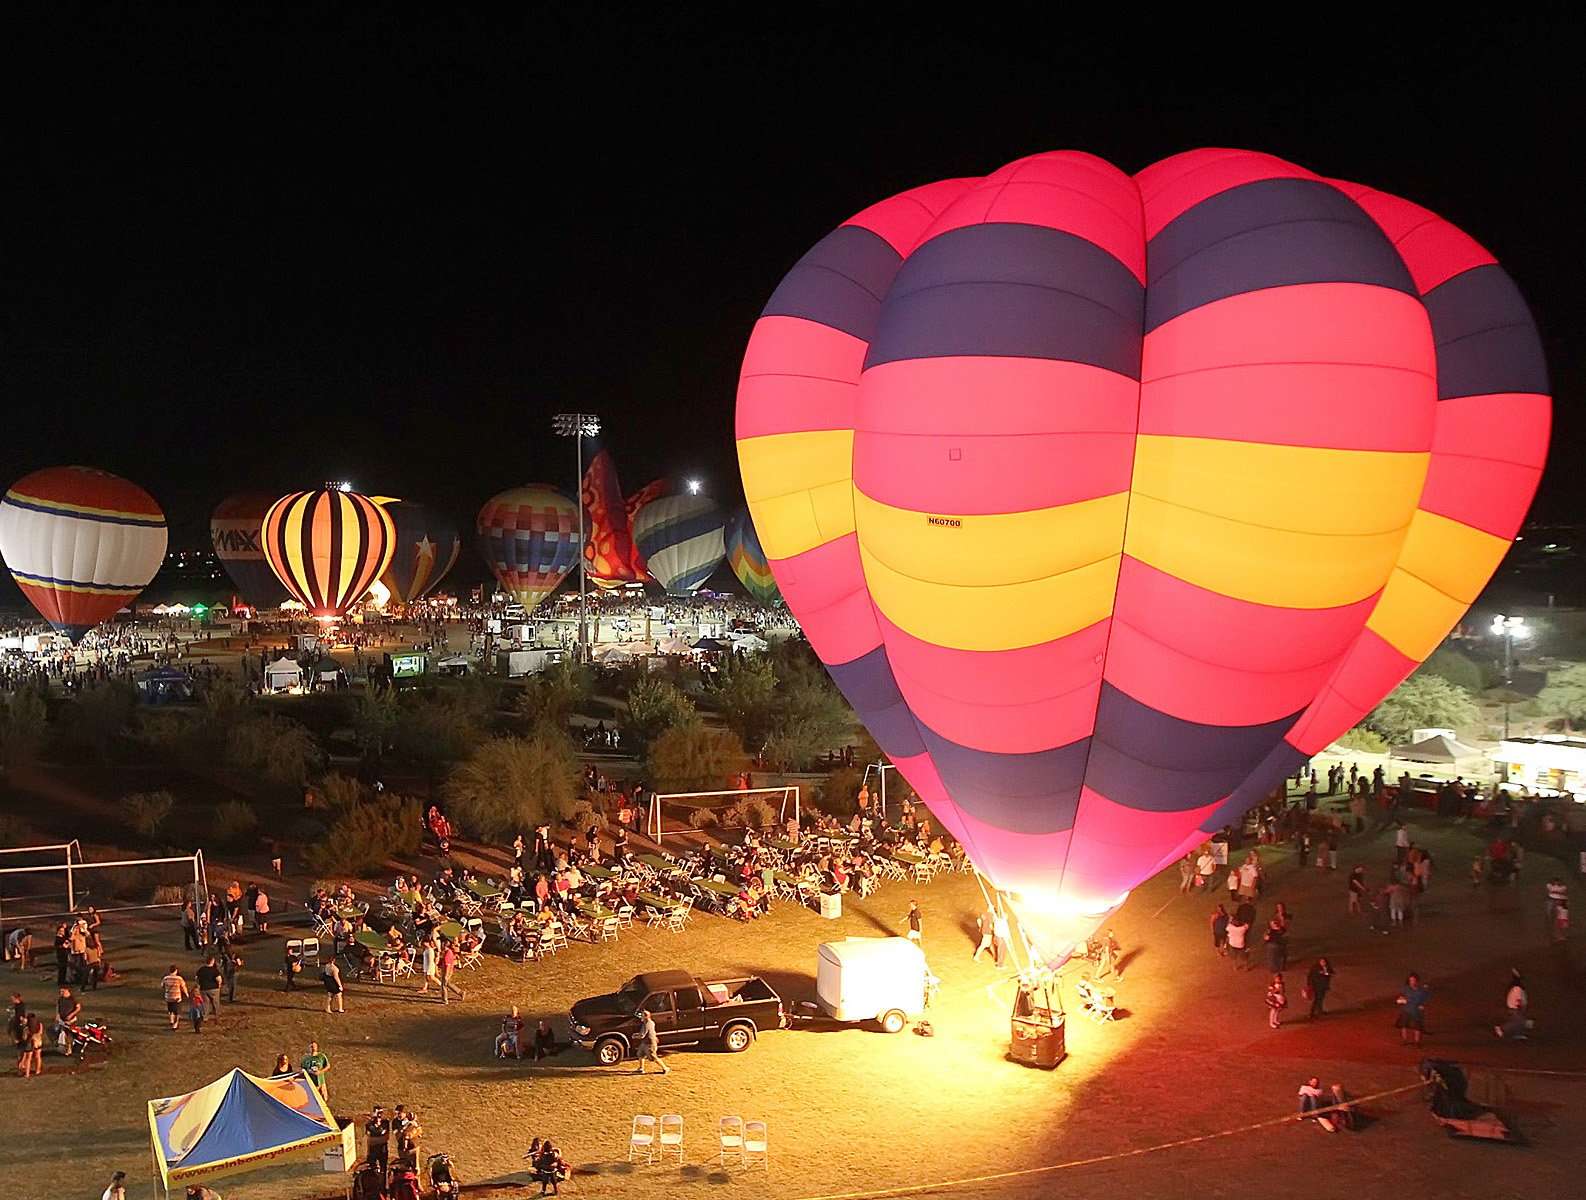 Spooktacular Hot Air Balloon
